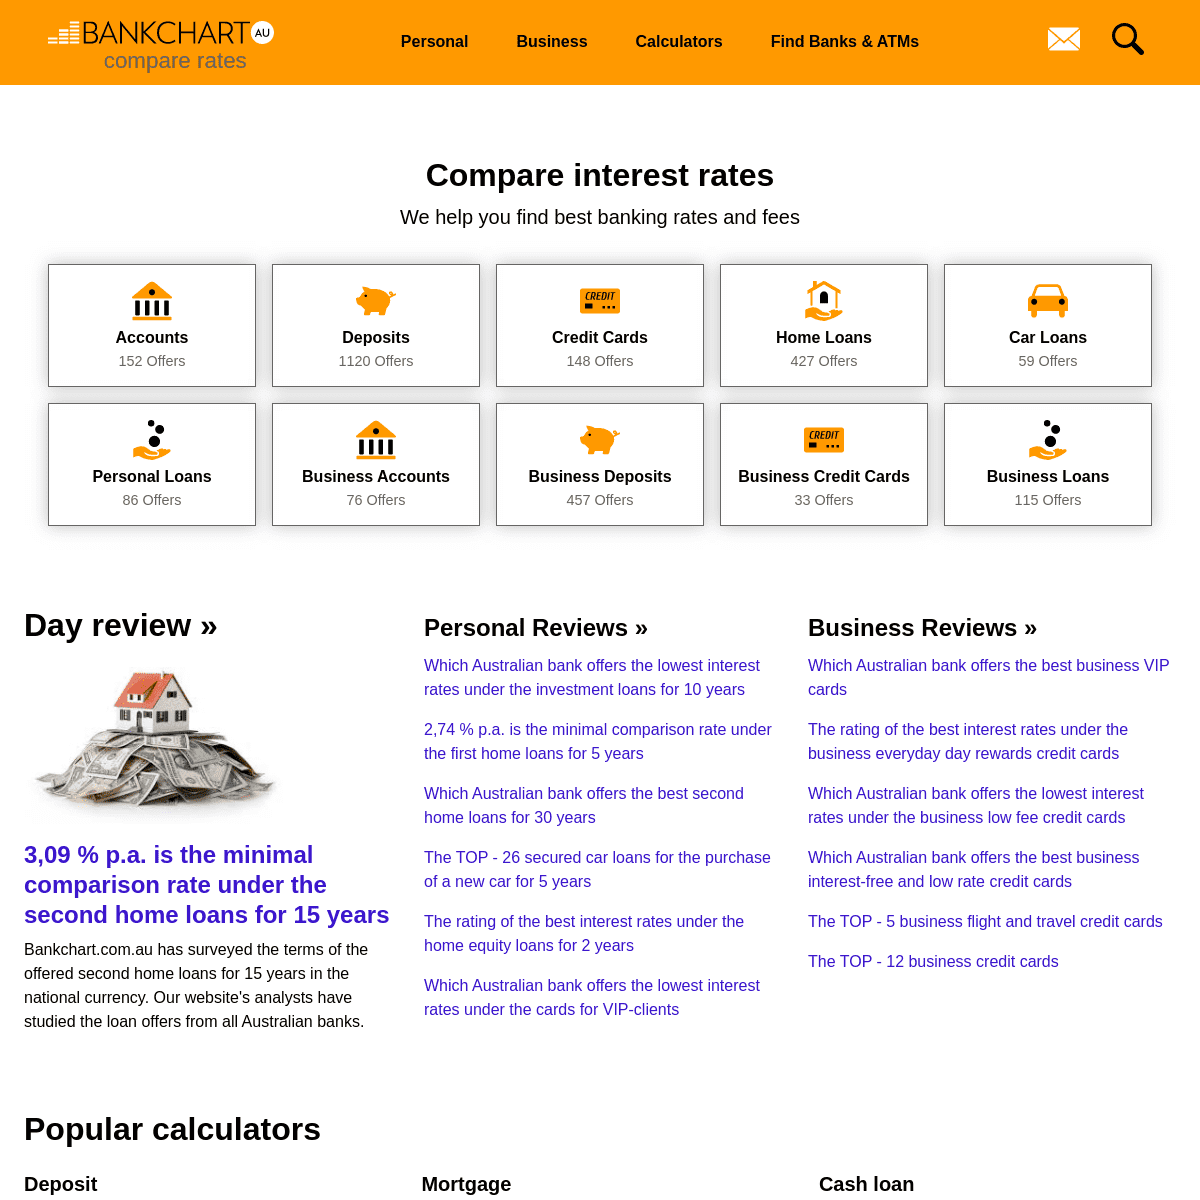 A complete backup of bankchart.com.au